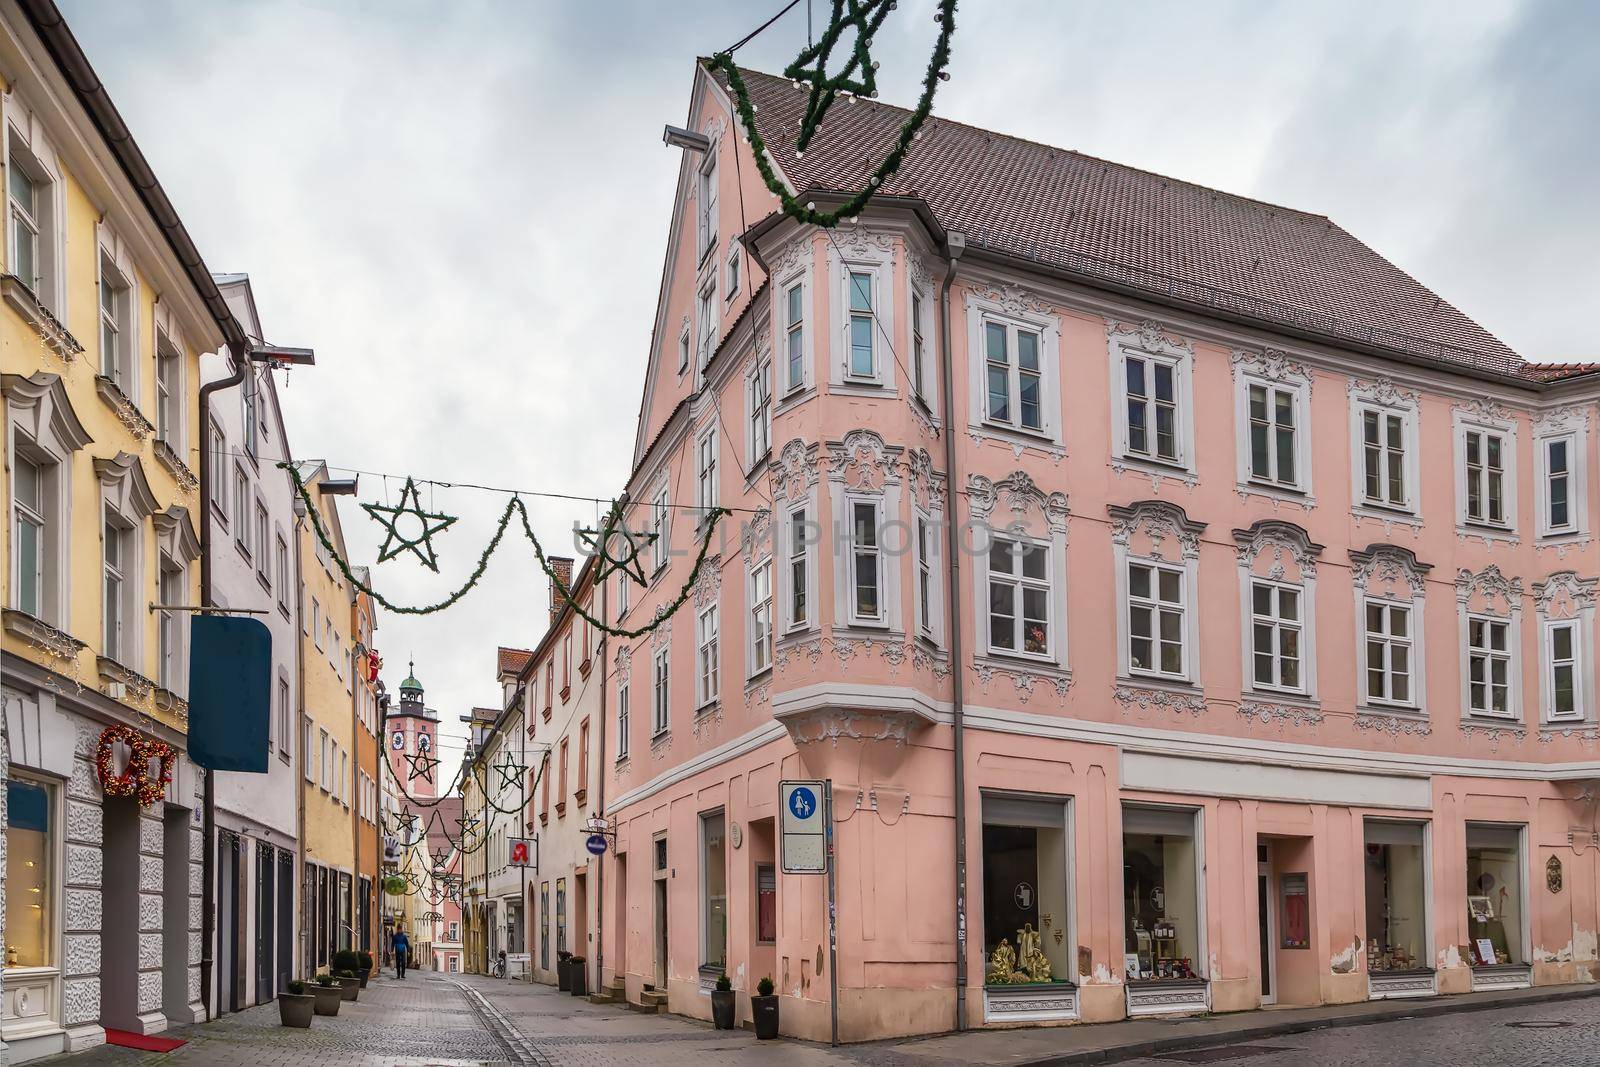 Street in Eichstatt, Germany  by borisb17